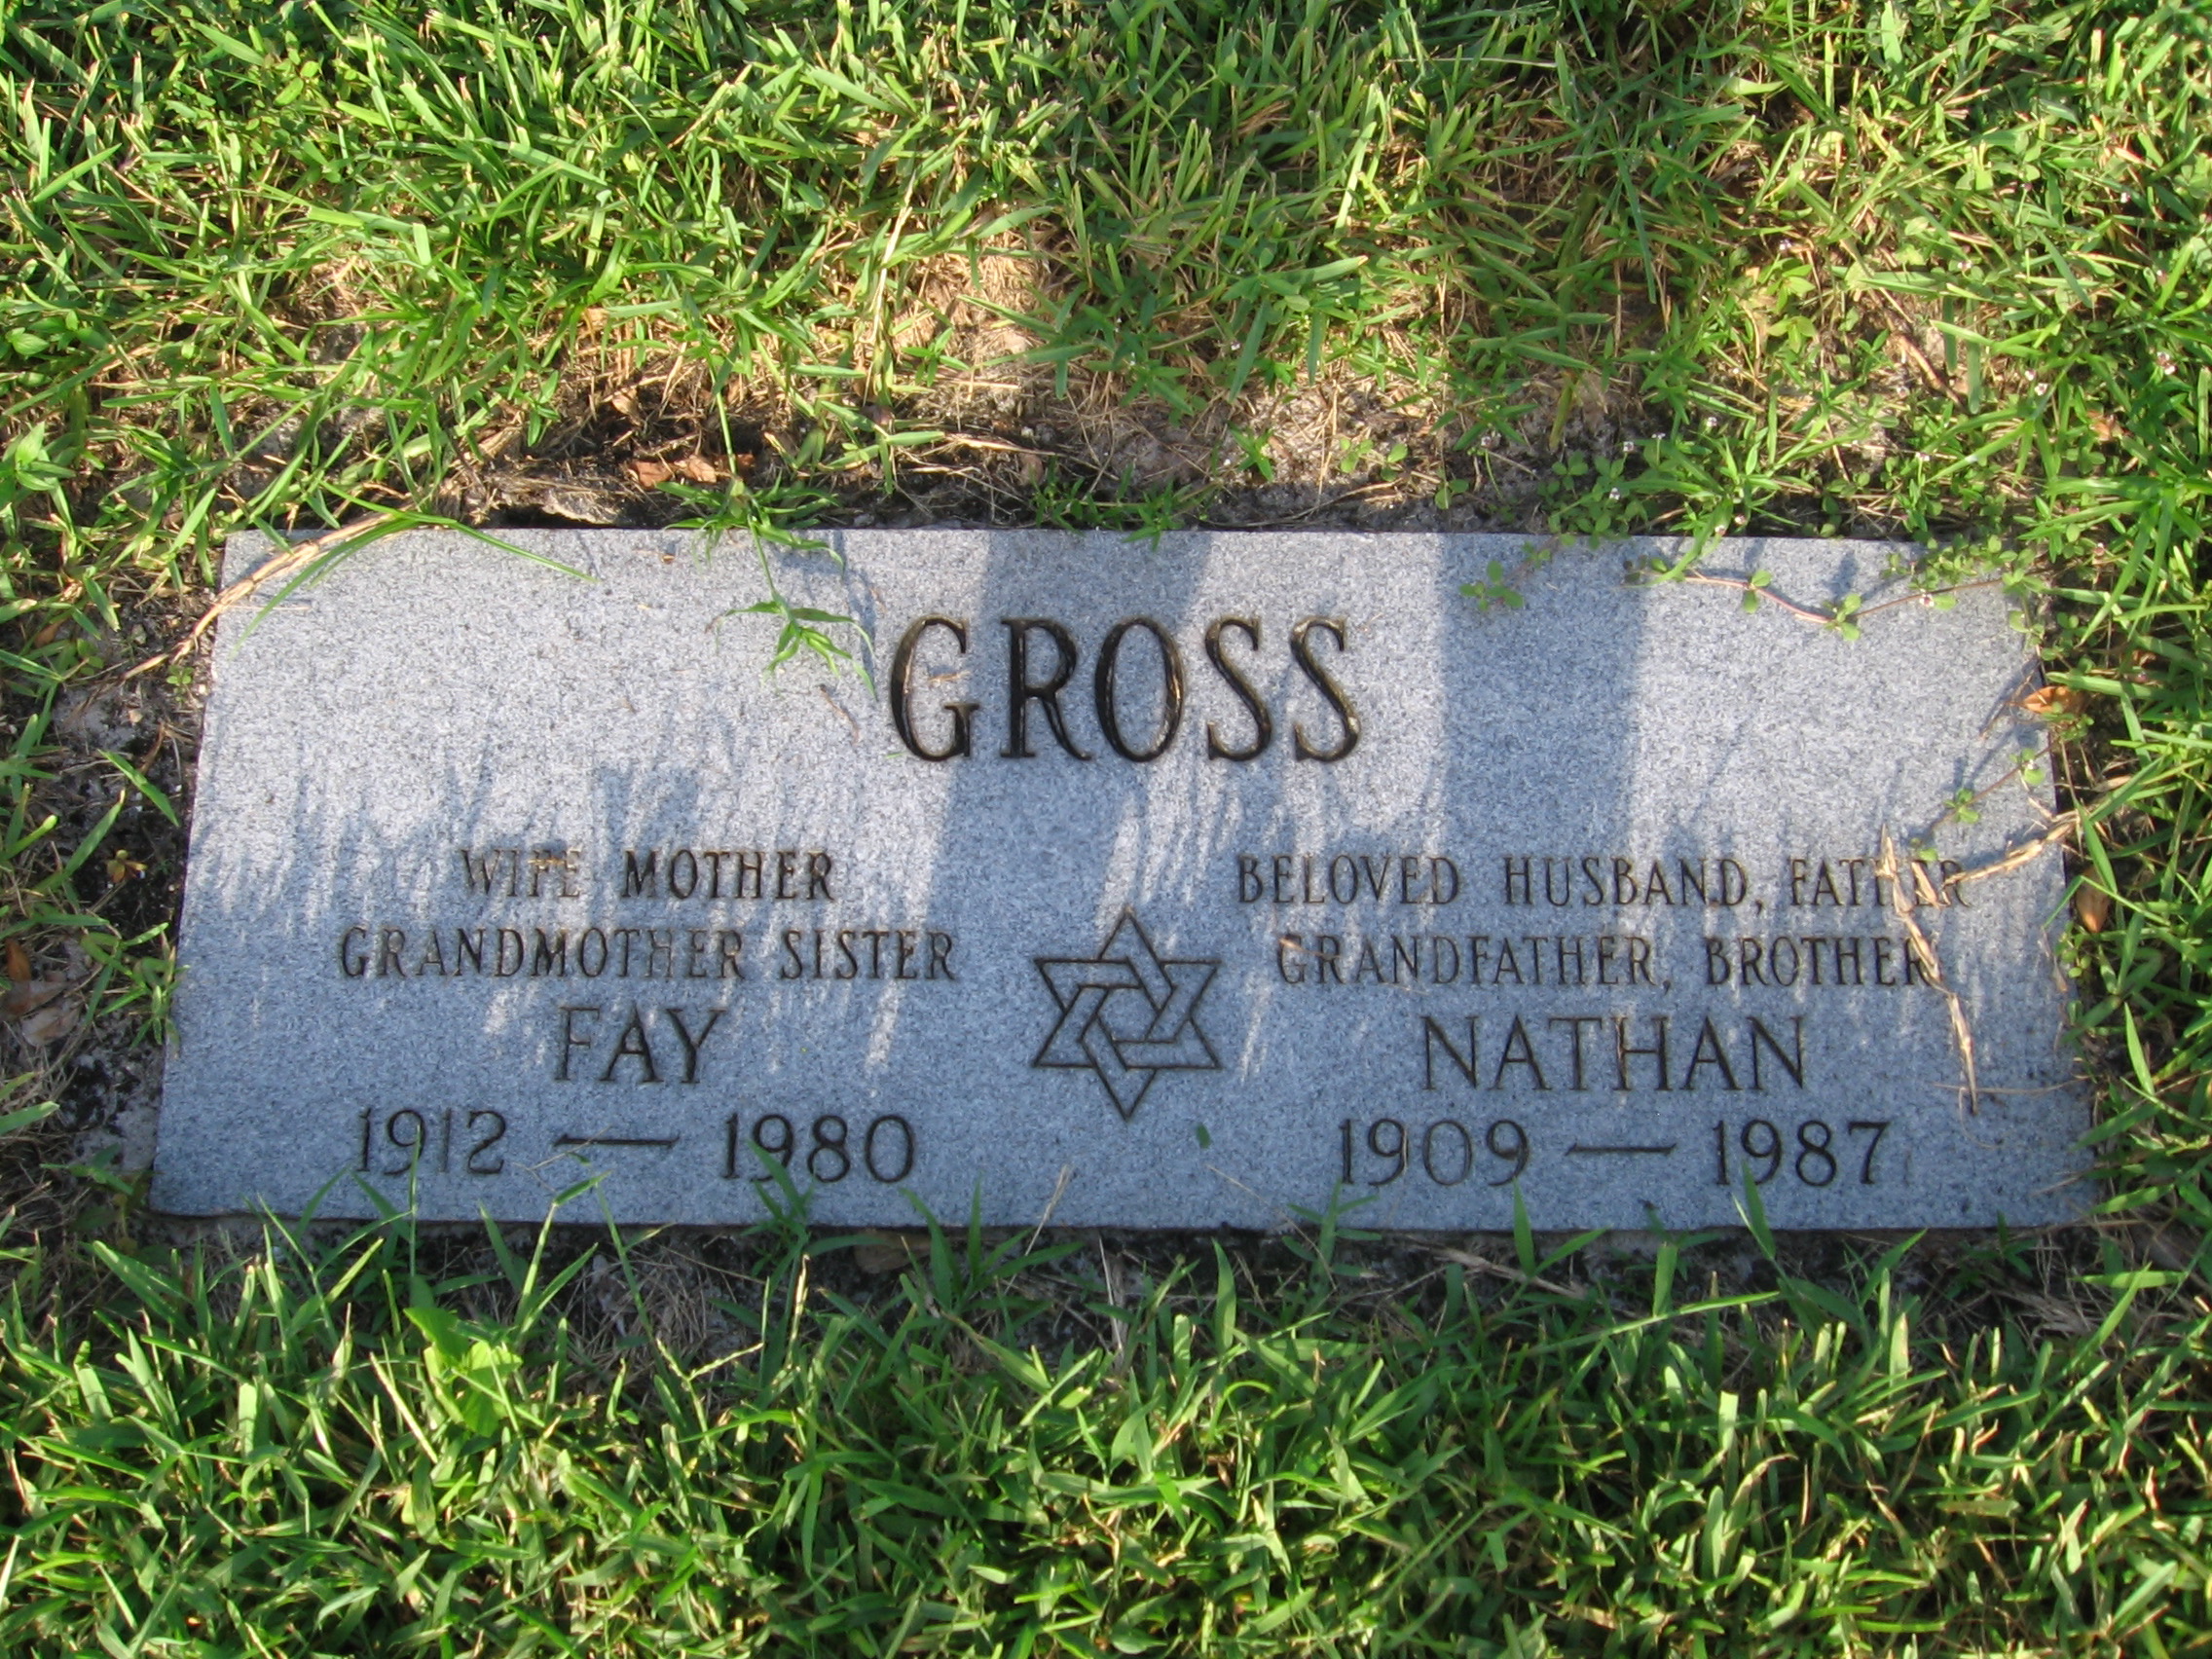 Fay Gross